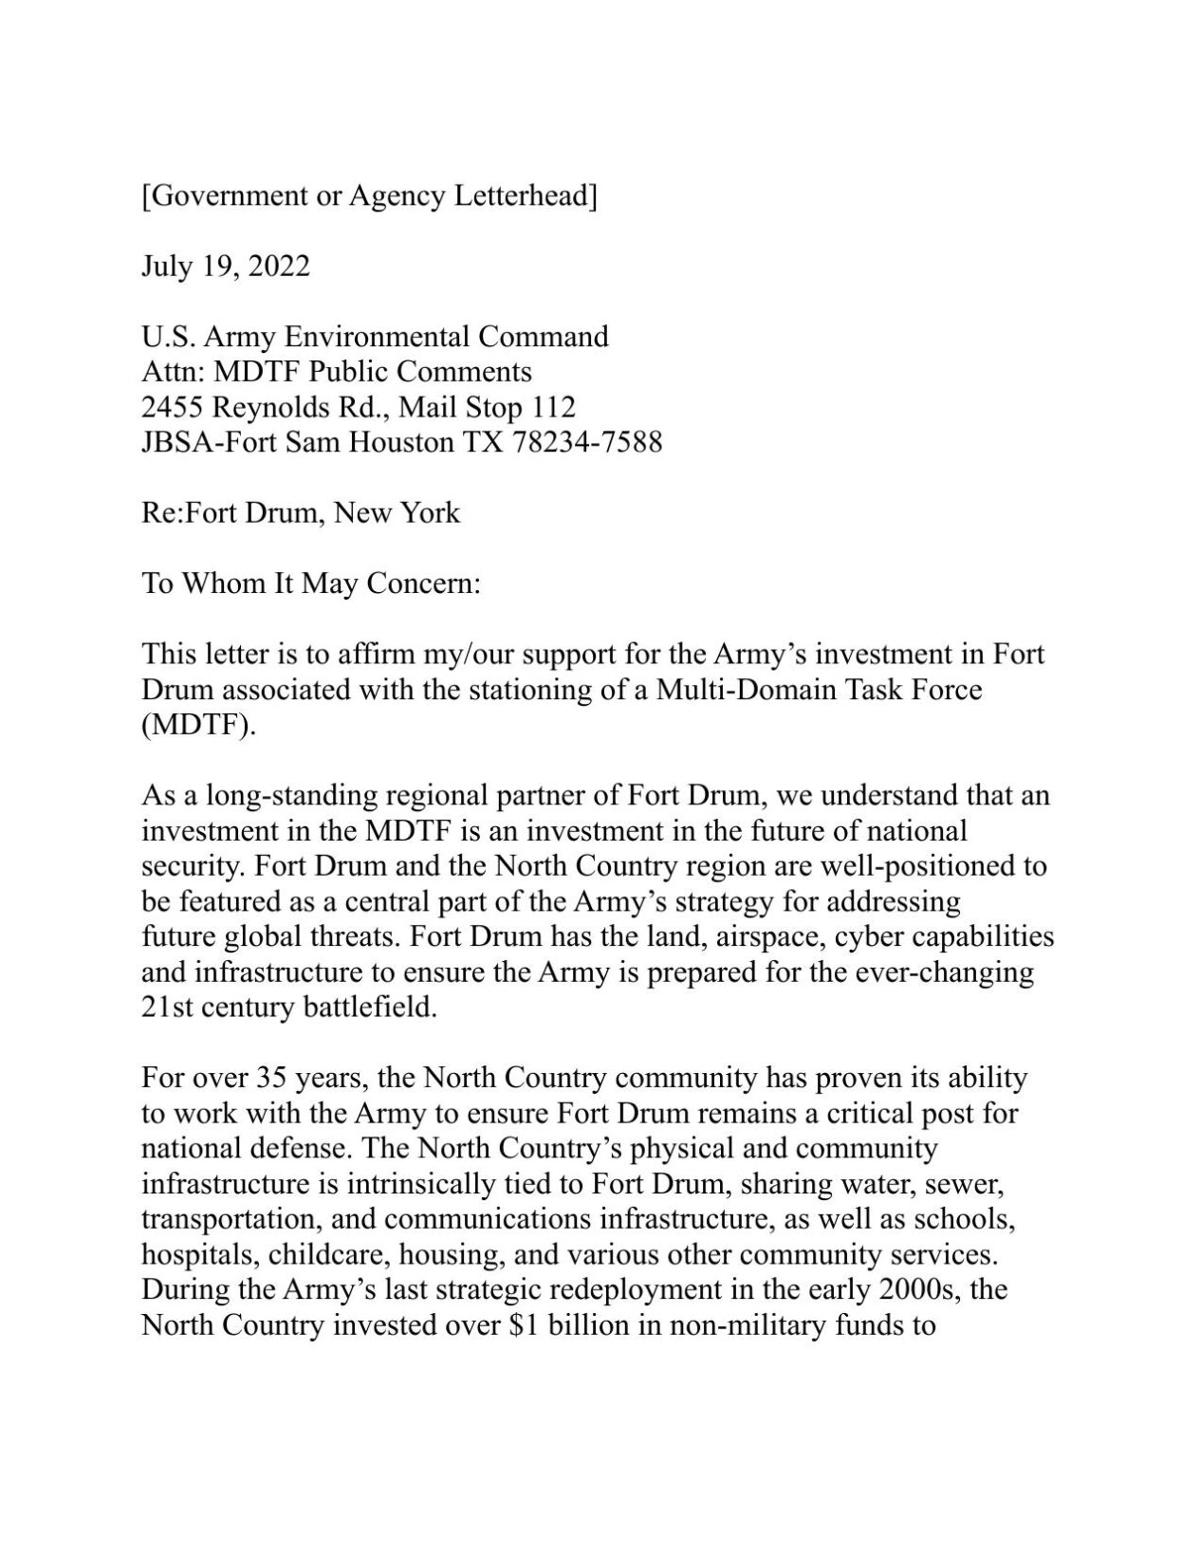 Fort Drum Support Letter